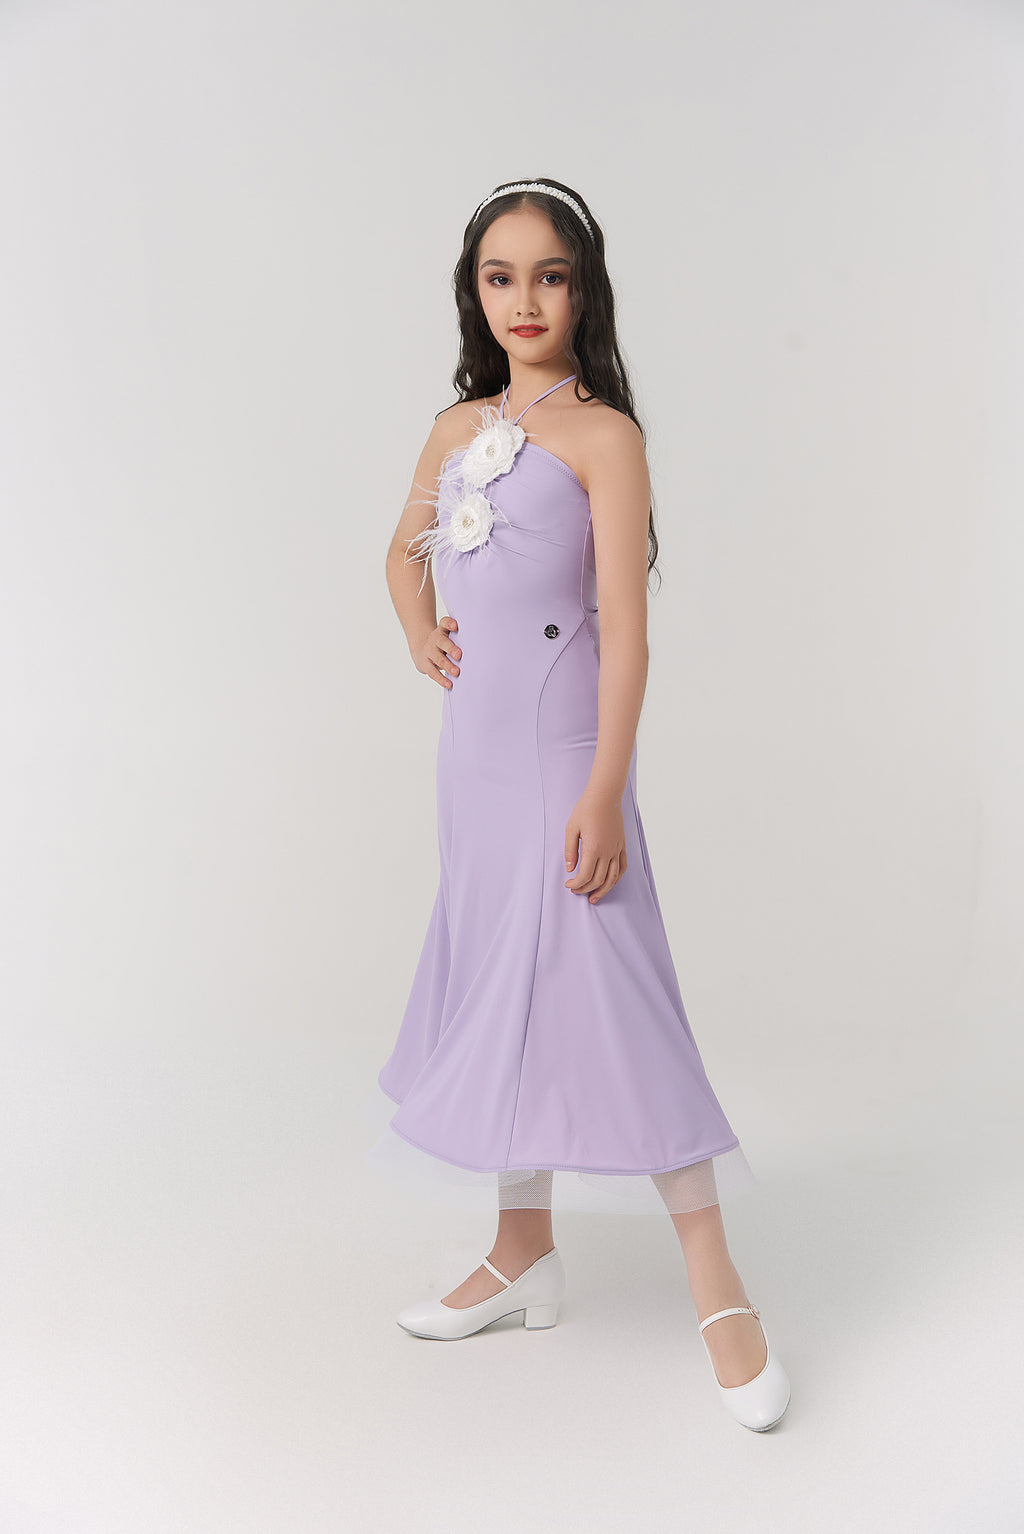 DQ-2306 Kid High-End Customized Floral Charm Halter Ruffle Dress